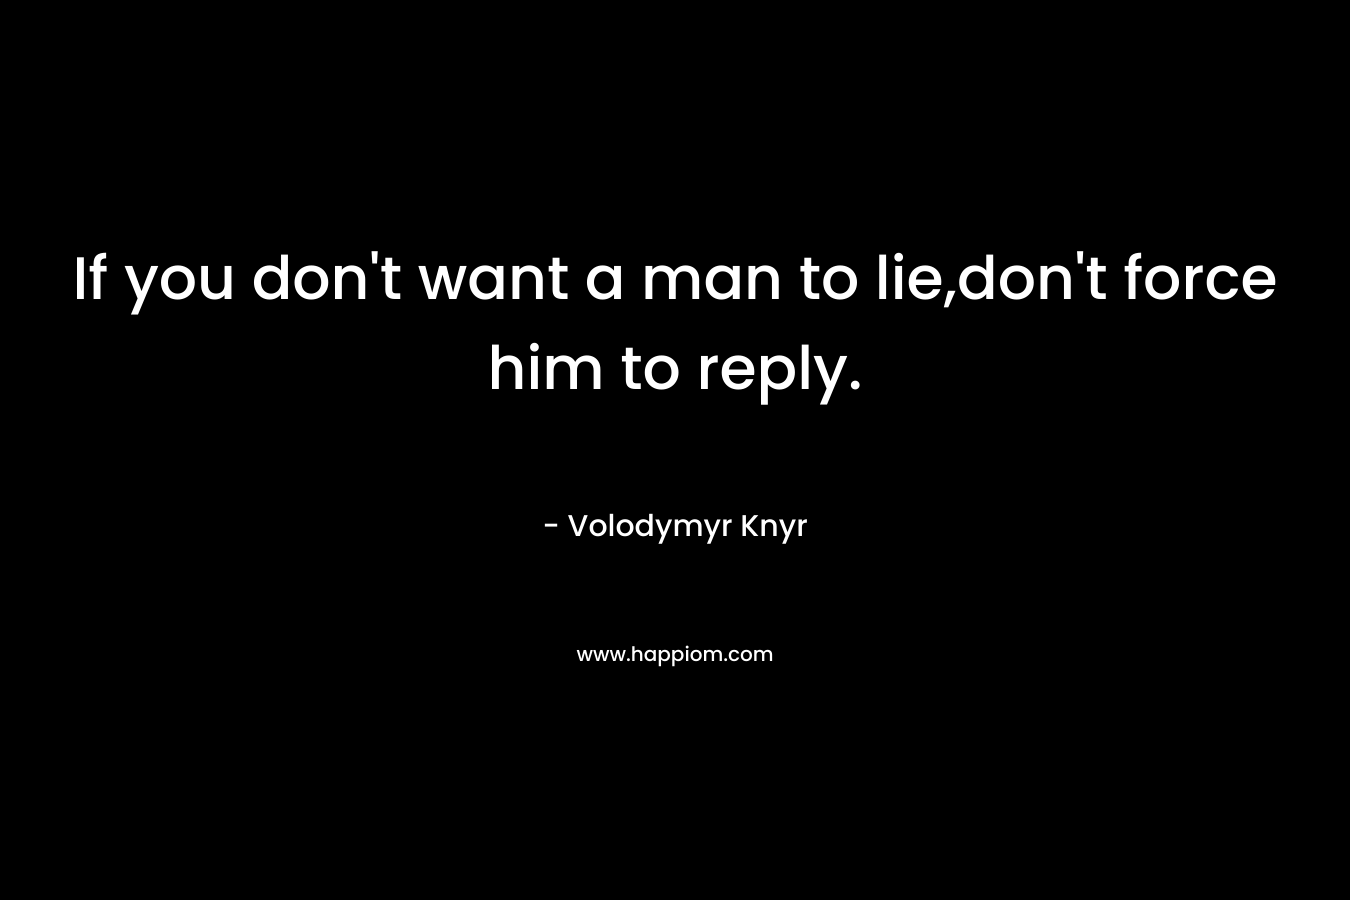 If you don't want a man to lie,don't force him to reply.